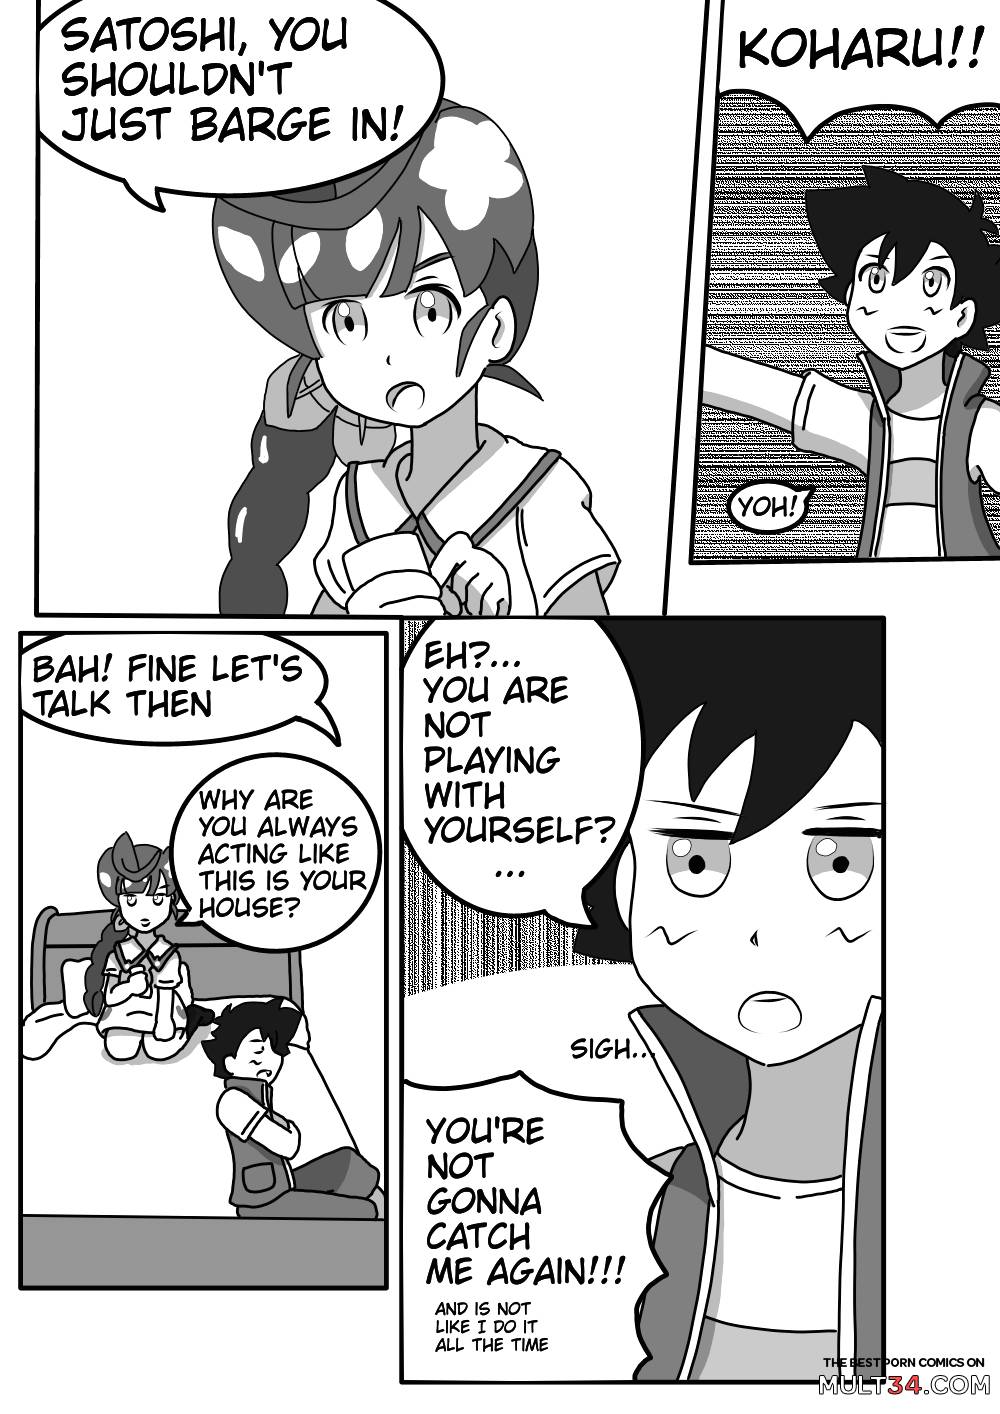 Satoshi and Koharu's Daily talk 4 page 2